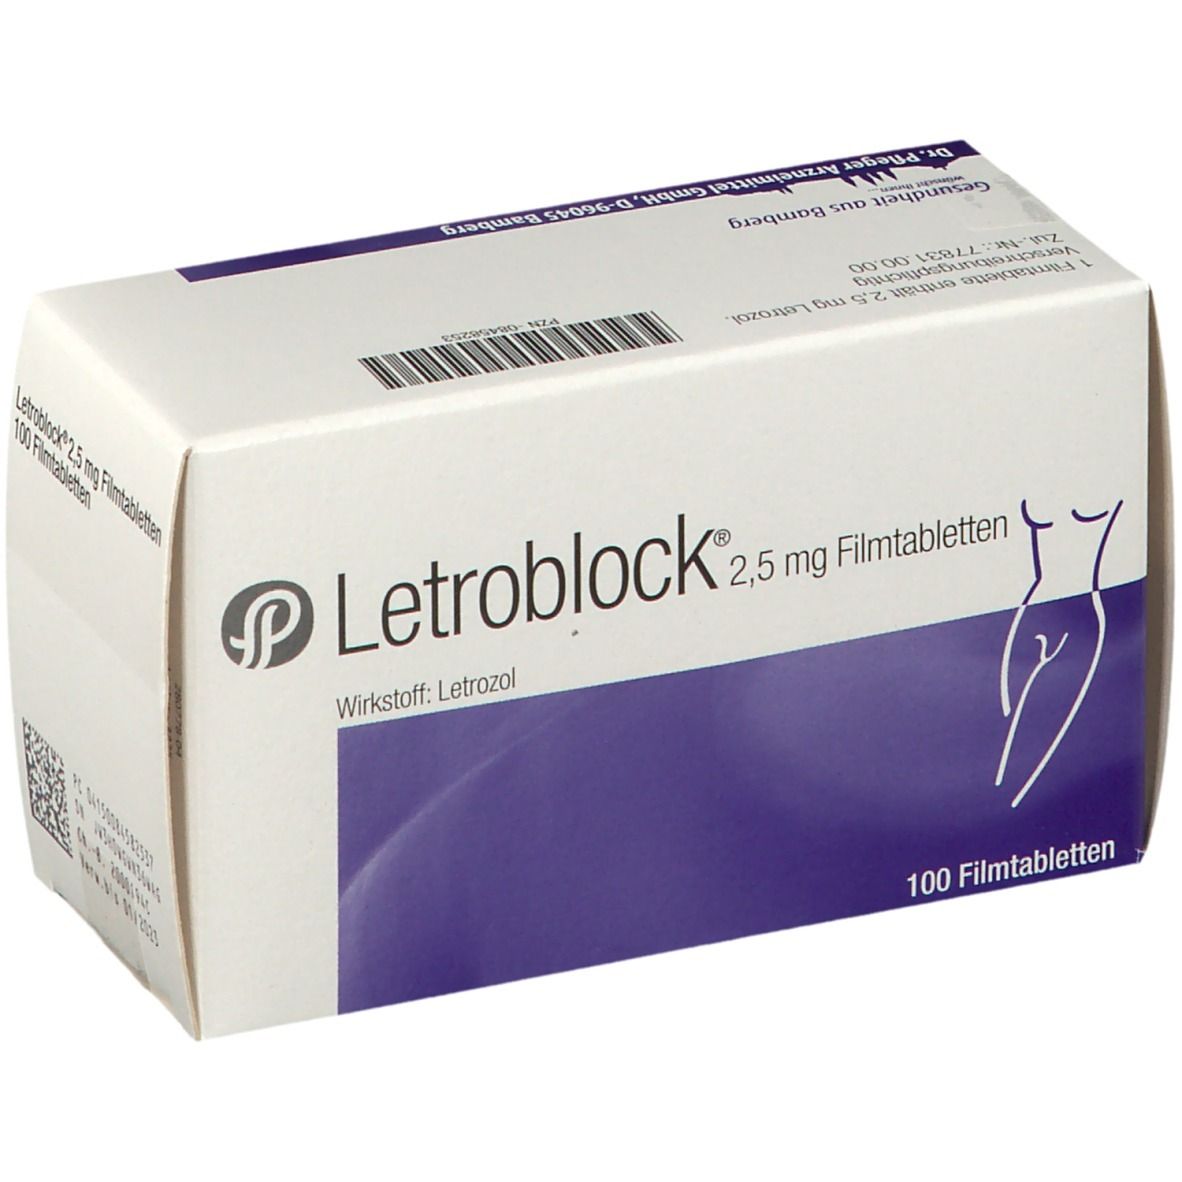 Letroblock® 2,5 mg